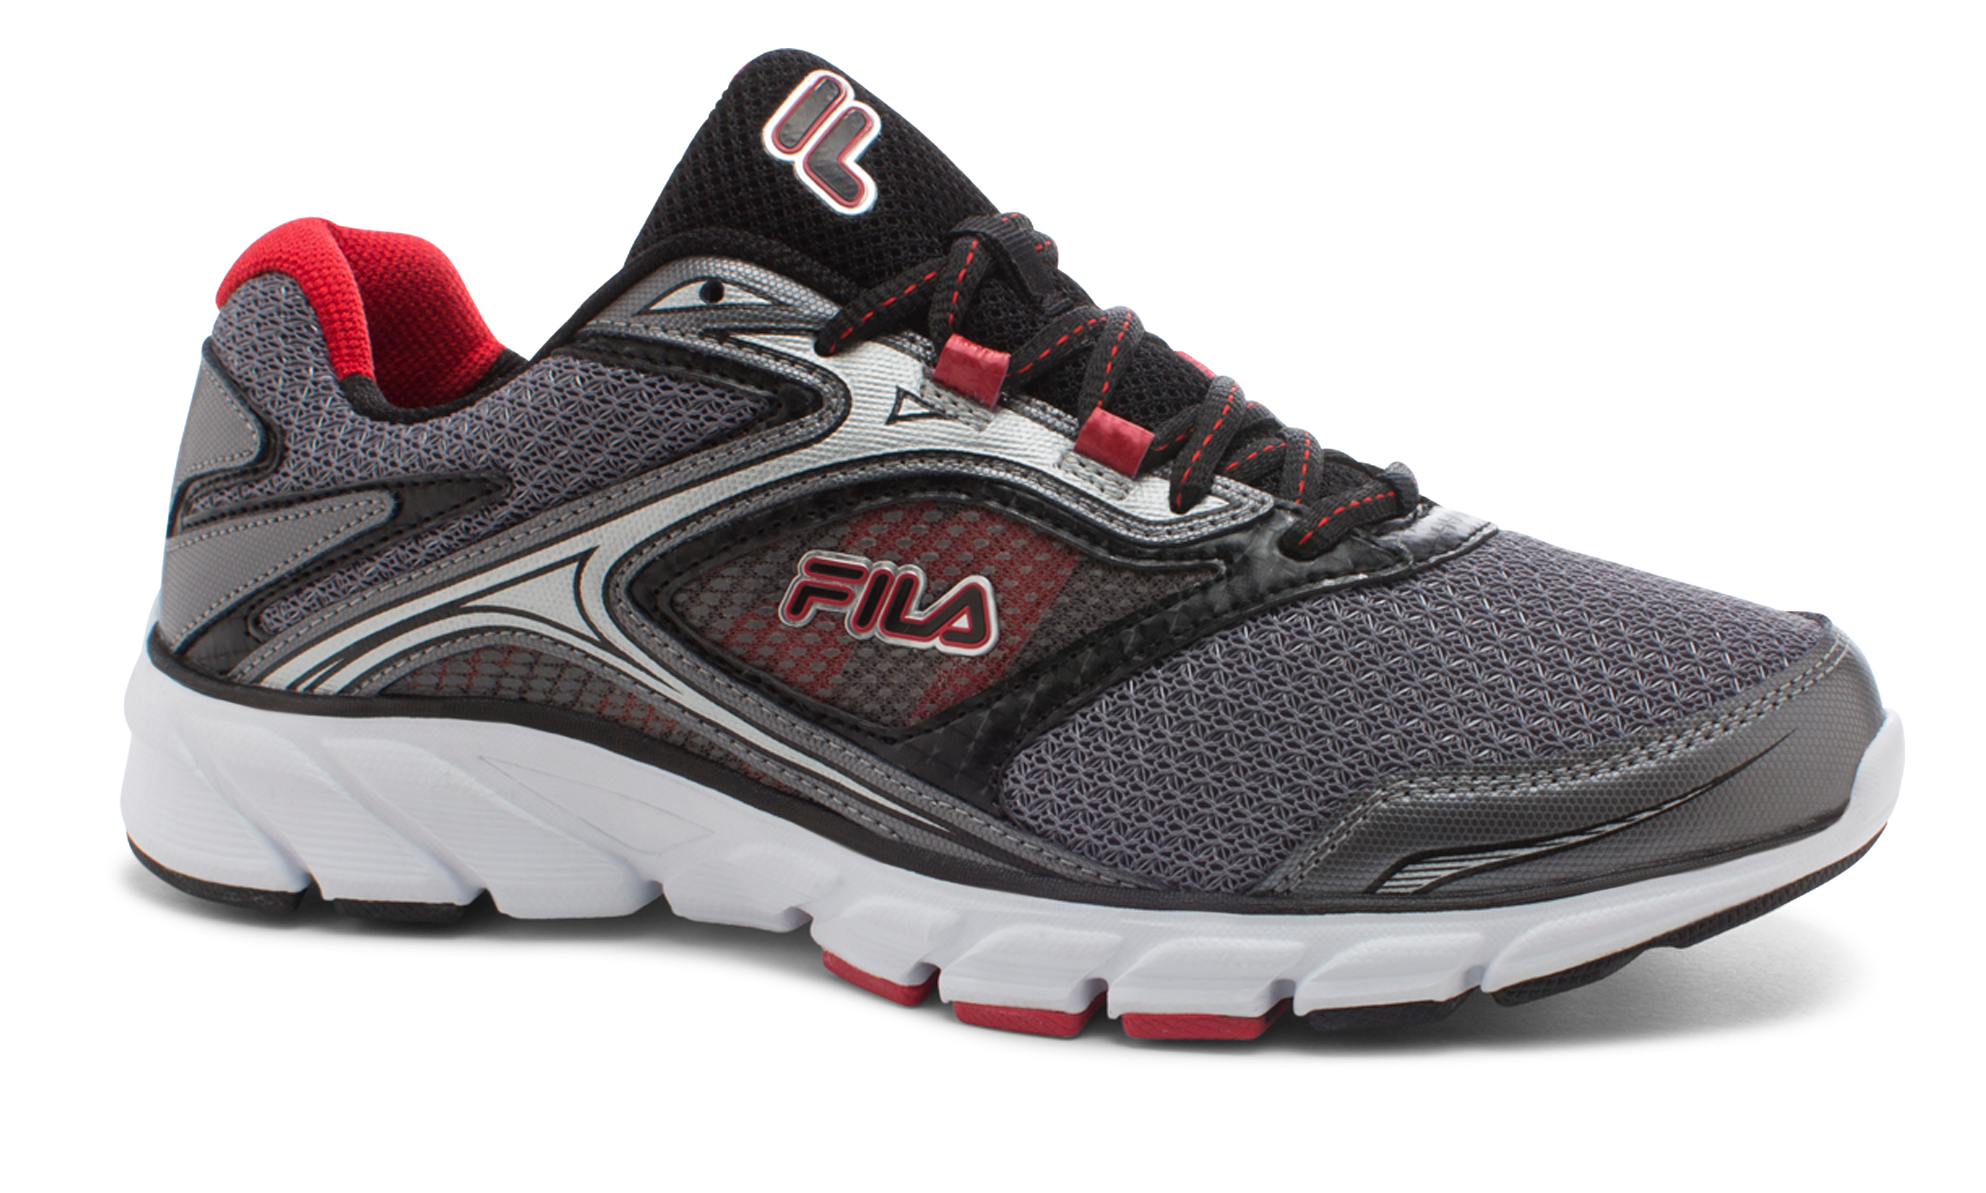 Fila Men’s Stir Up Running Shoes Only $19.99!